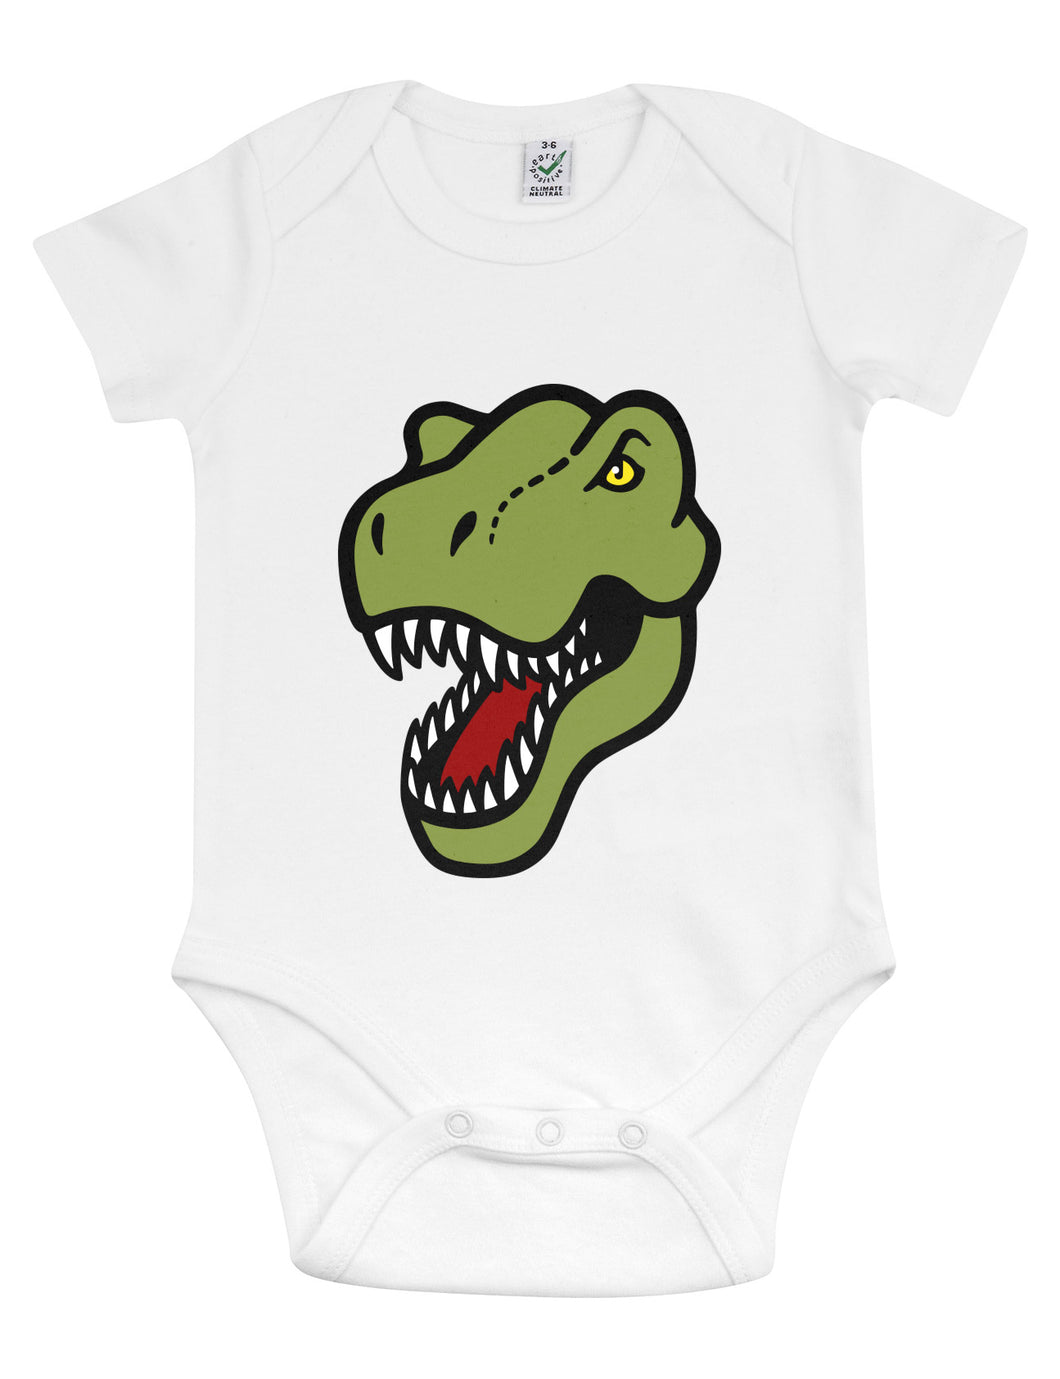 dinosaur baby grow T-rex